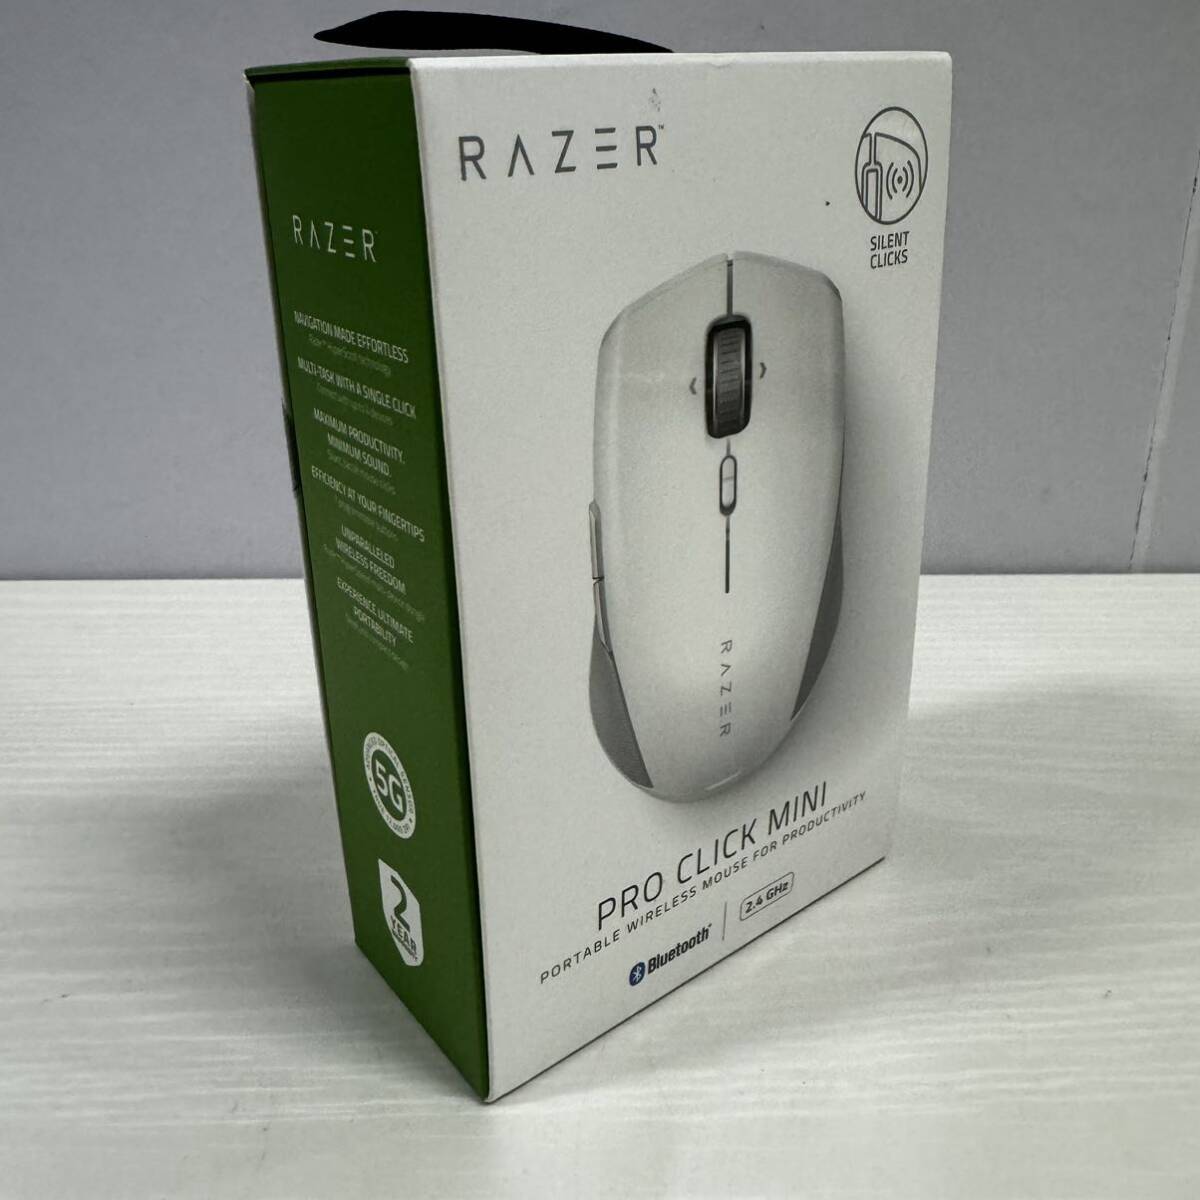 Razer Pro Click Mini ワイヤレス マウス 2.4GHz Bluetooth 静音 メカニカルスイッチ 無線 12,000DPI Razer 5G光学センサー 7ボタン の画像1